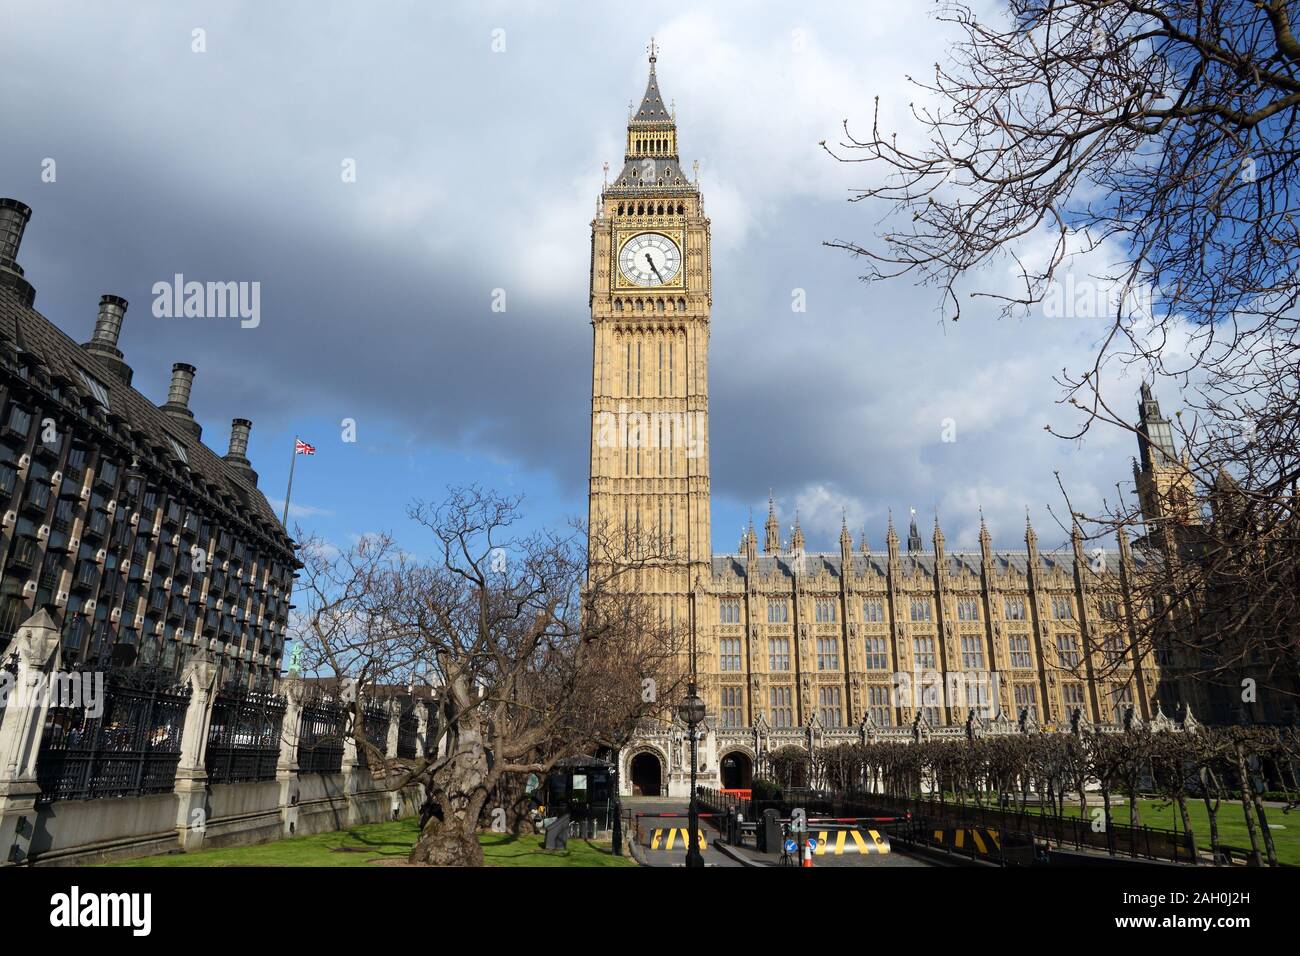 Big Ben clock tower. Landmark of London, UK. Stock Photo